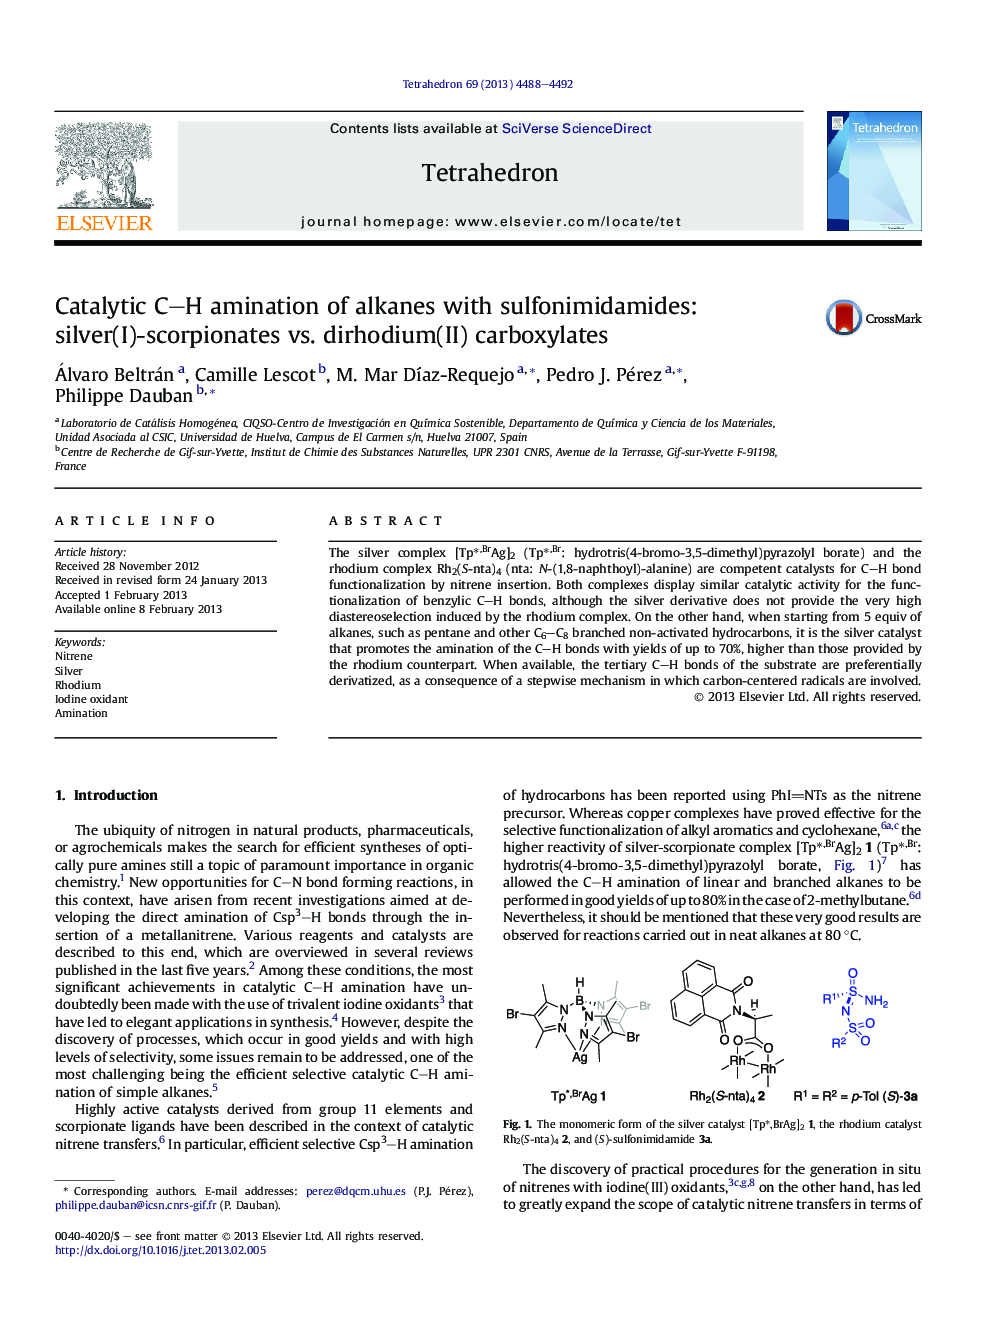 Catalytic C-H amination of alkanes with sulfonimidamides: silver(I)-scorpionates vs. dirhodium(II) carboxylates